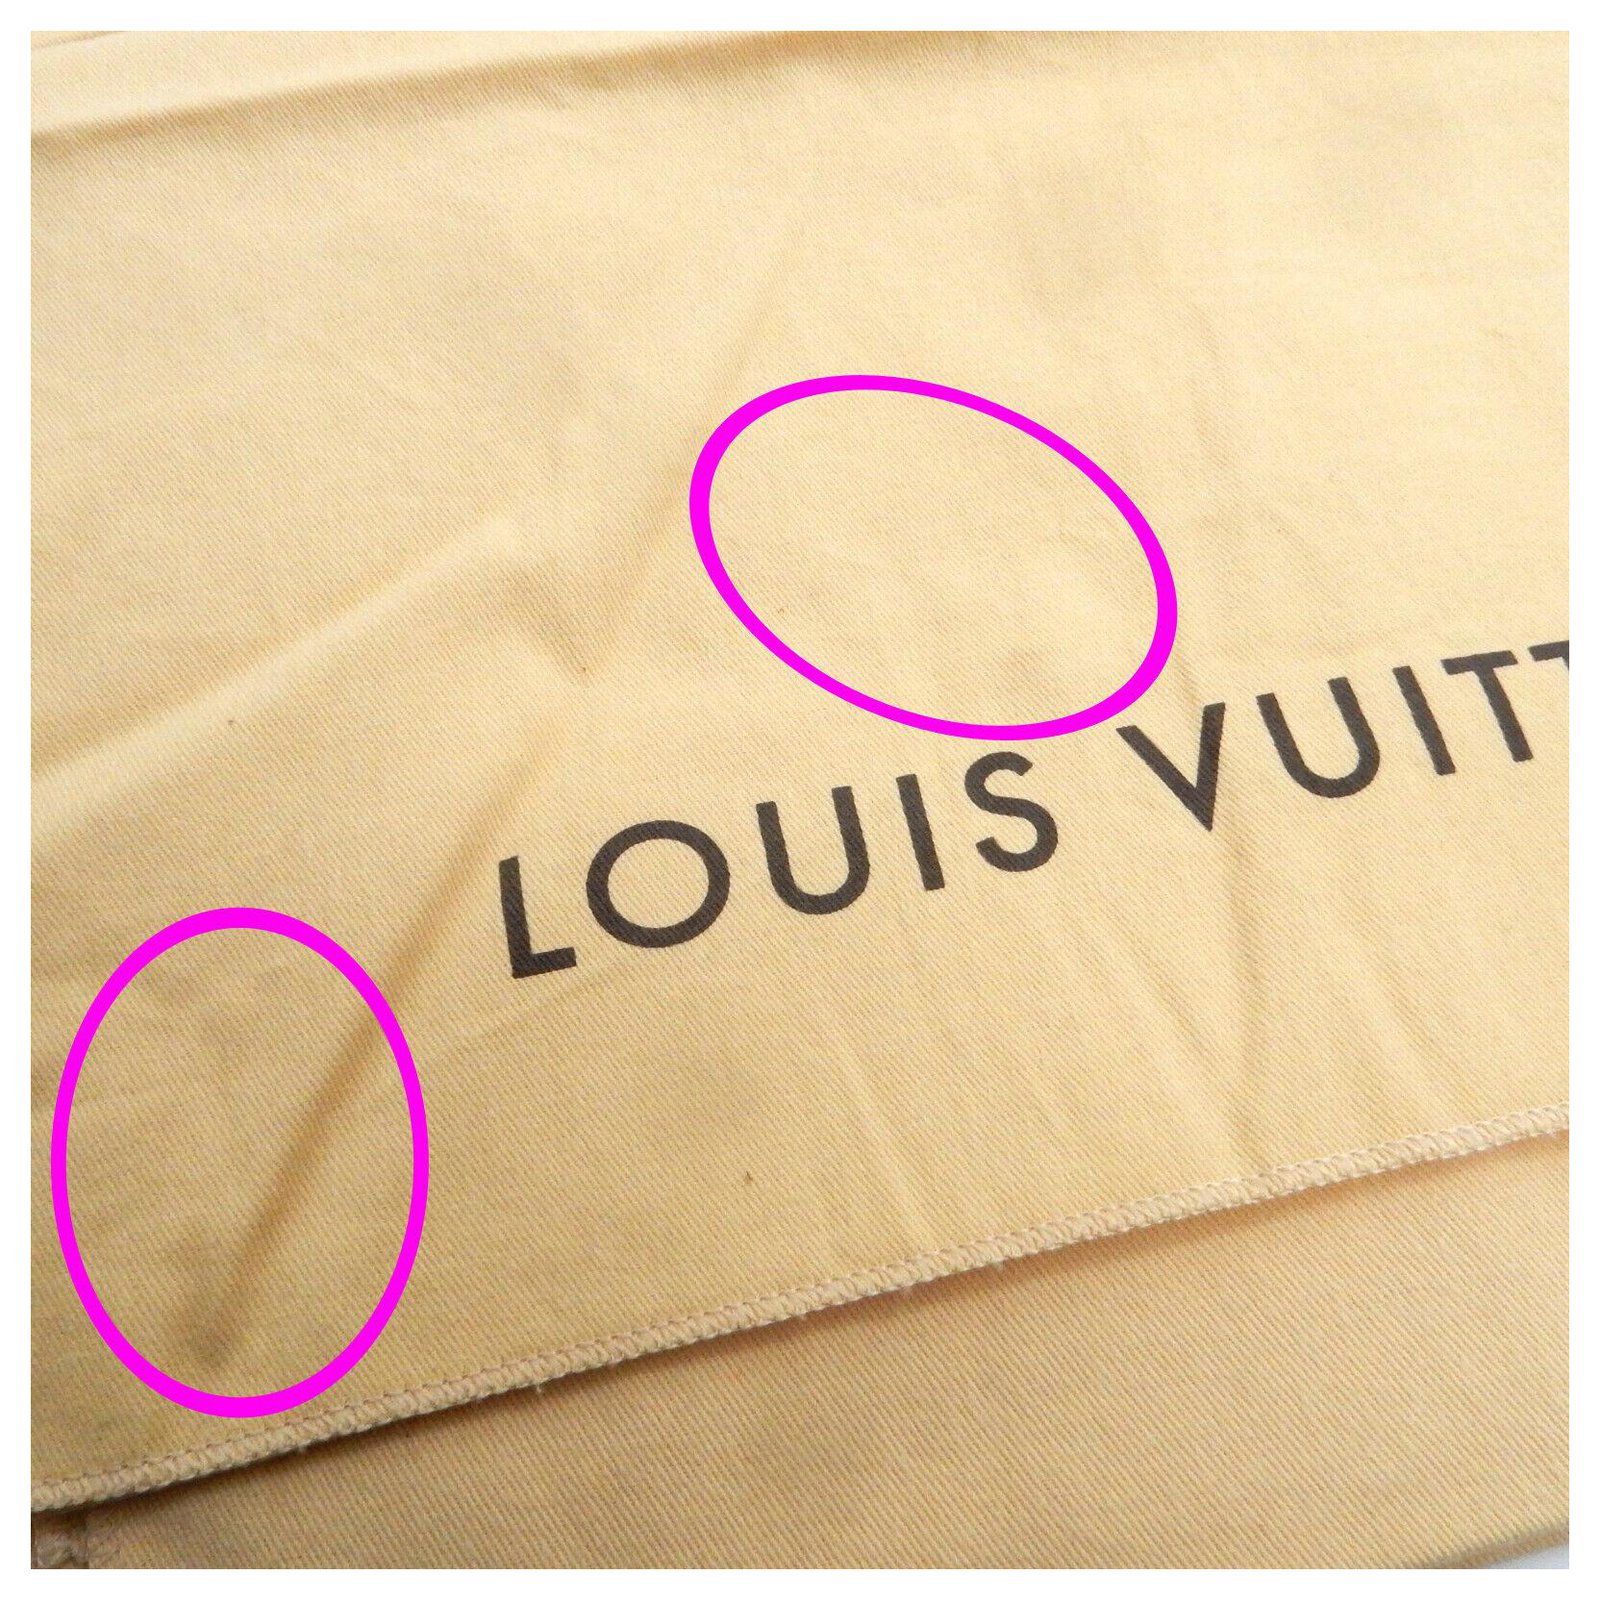 Louis Vuitton Dust Cover Bag 413364/O see description